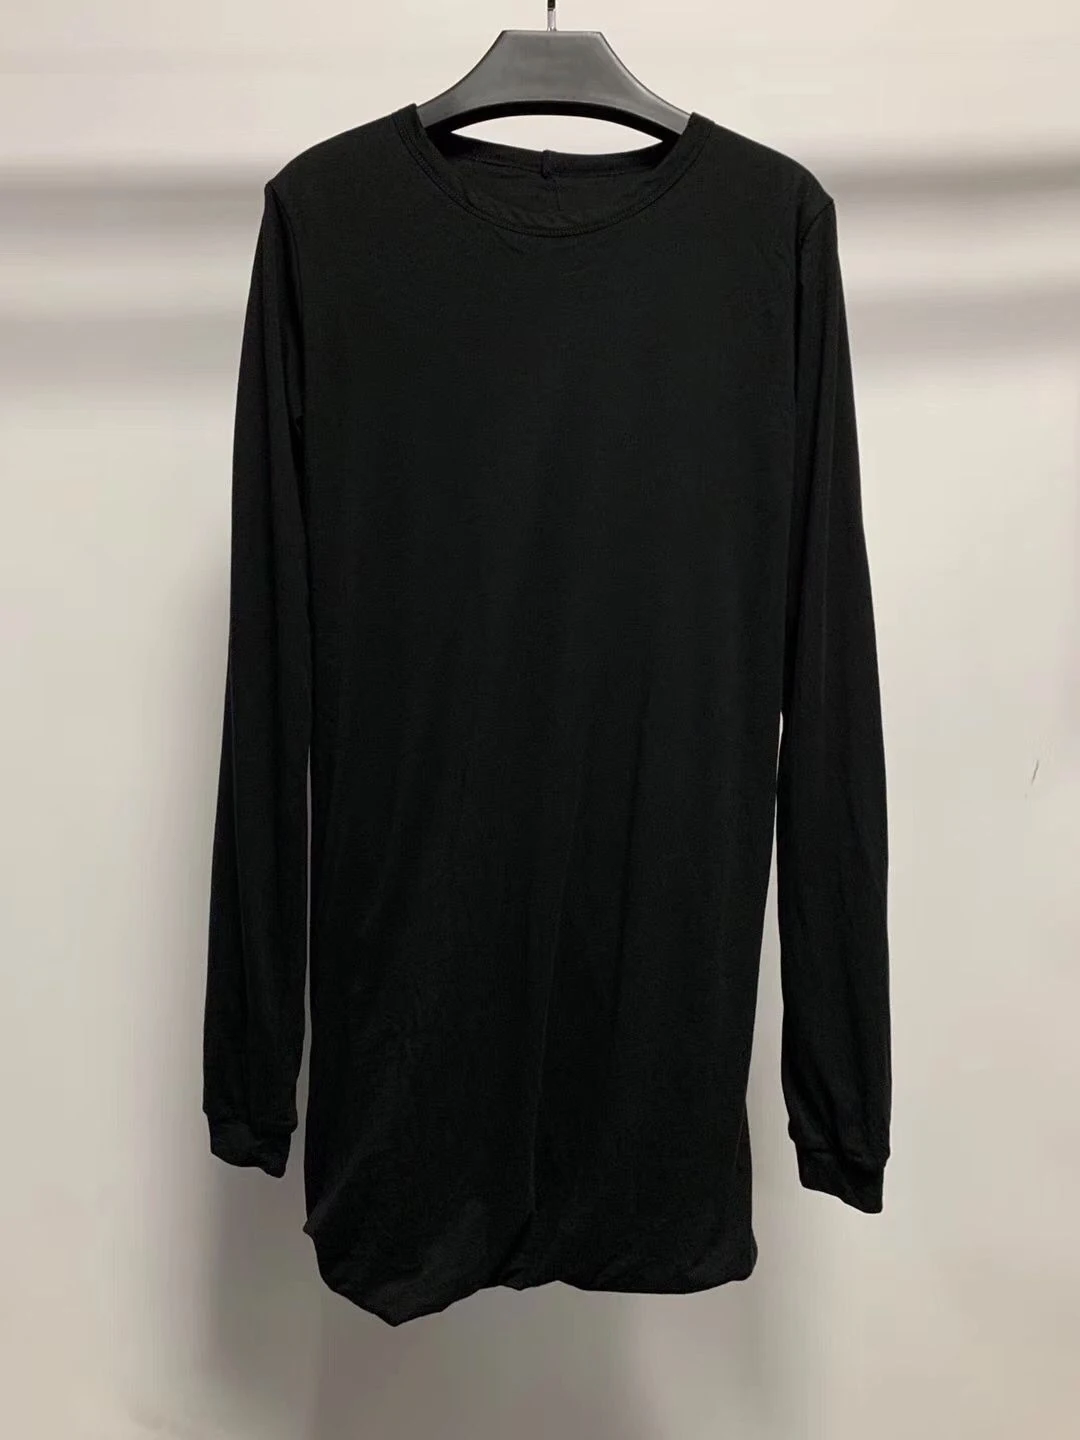 Owen seak Men Cotton Hoodies Sweatshirts Gothic Style Men's Clothing Classic Spring Women Solid Black Long Bottoming shirt